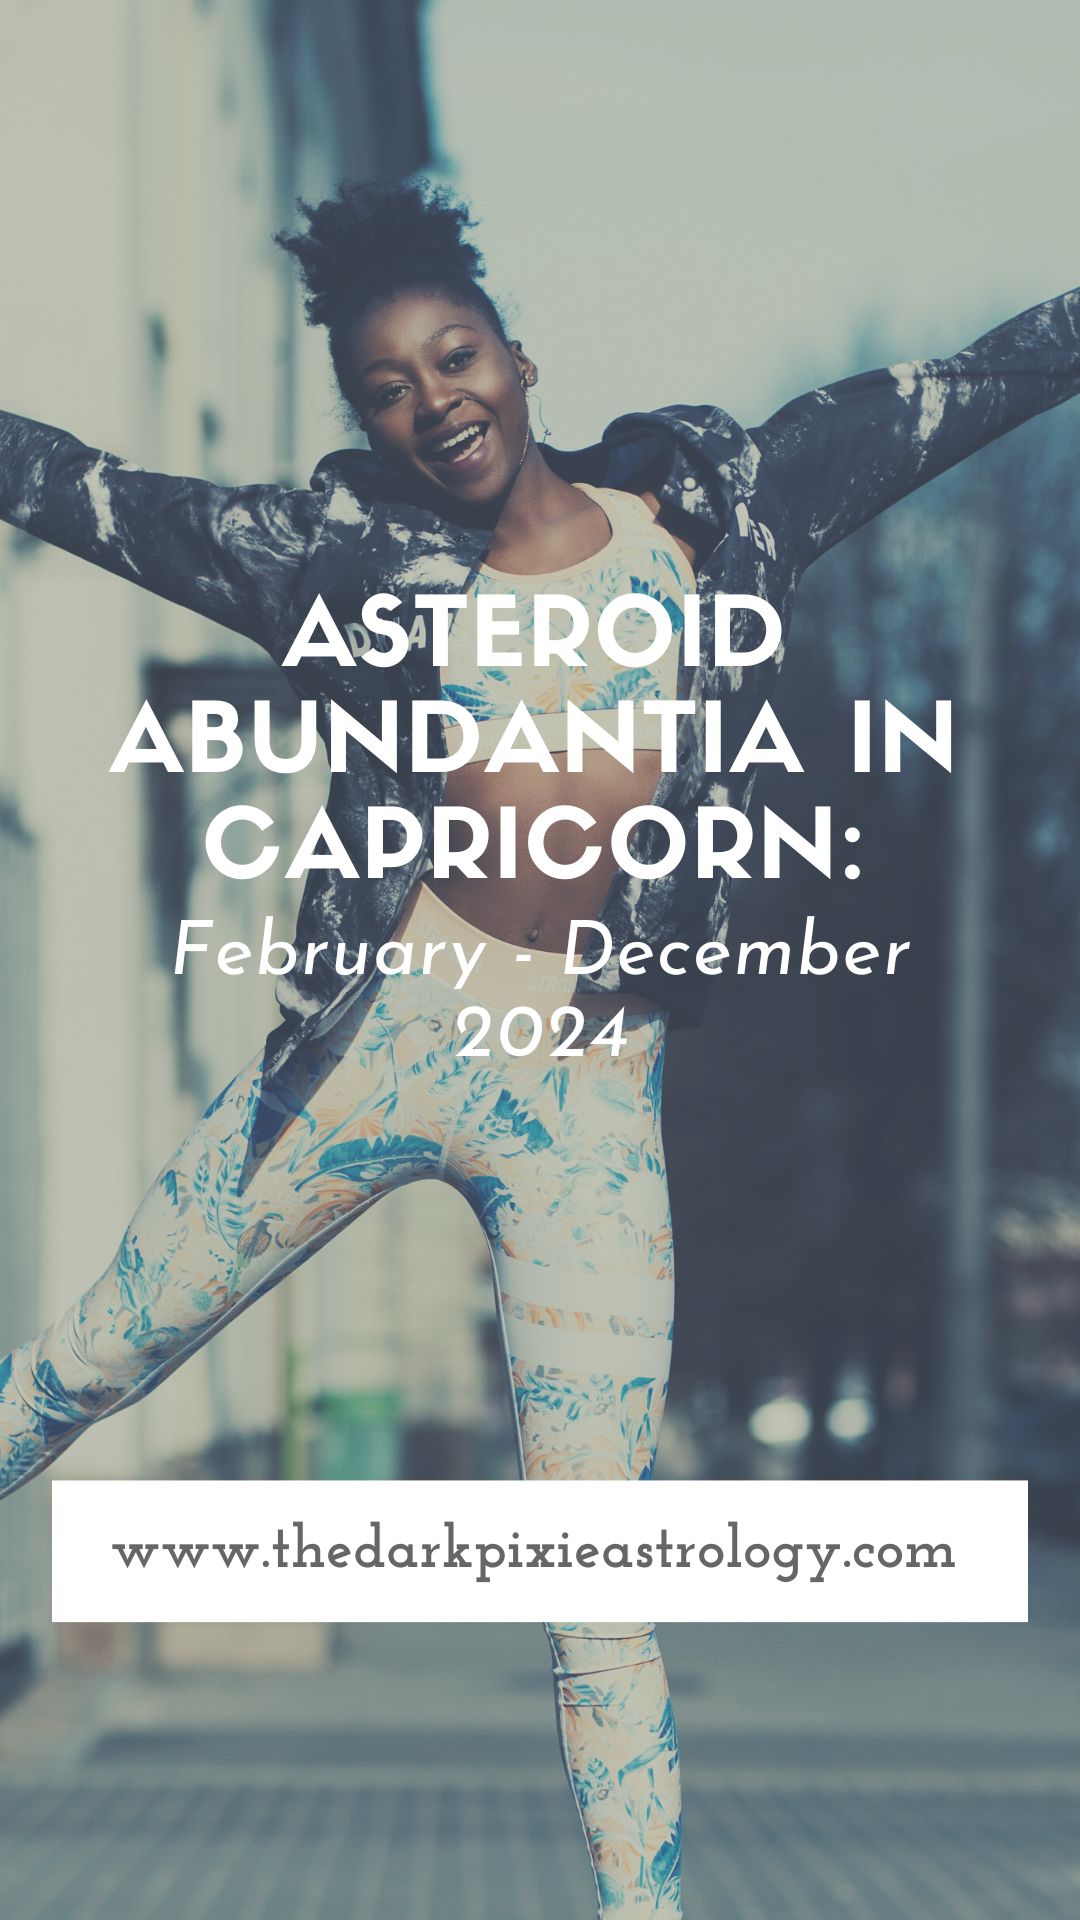 Asteroid Abundantia in Capricorn: February - December 2024 - The Dark Pixie Astrology